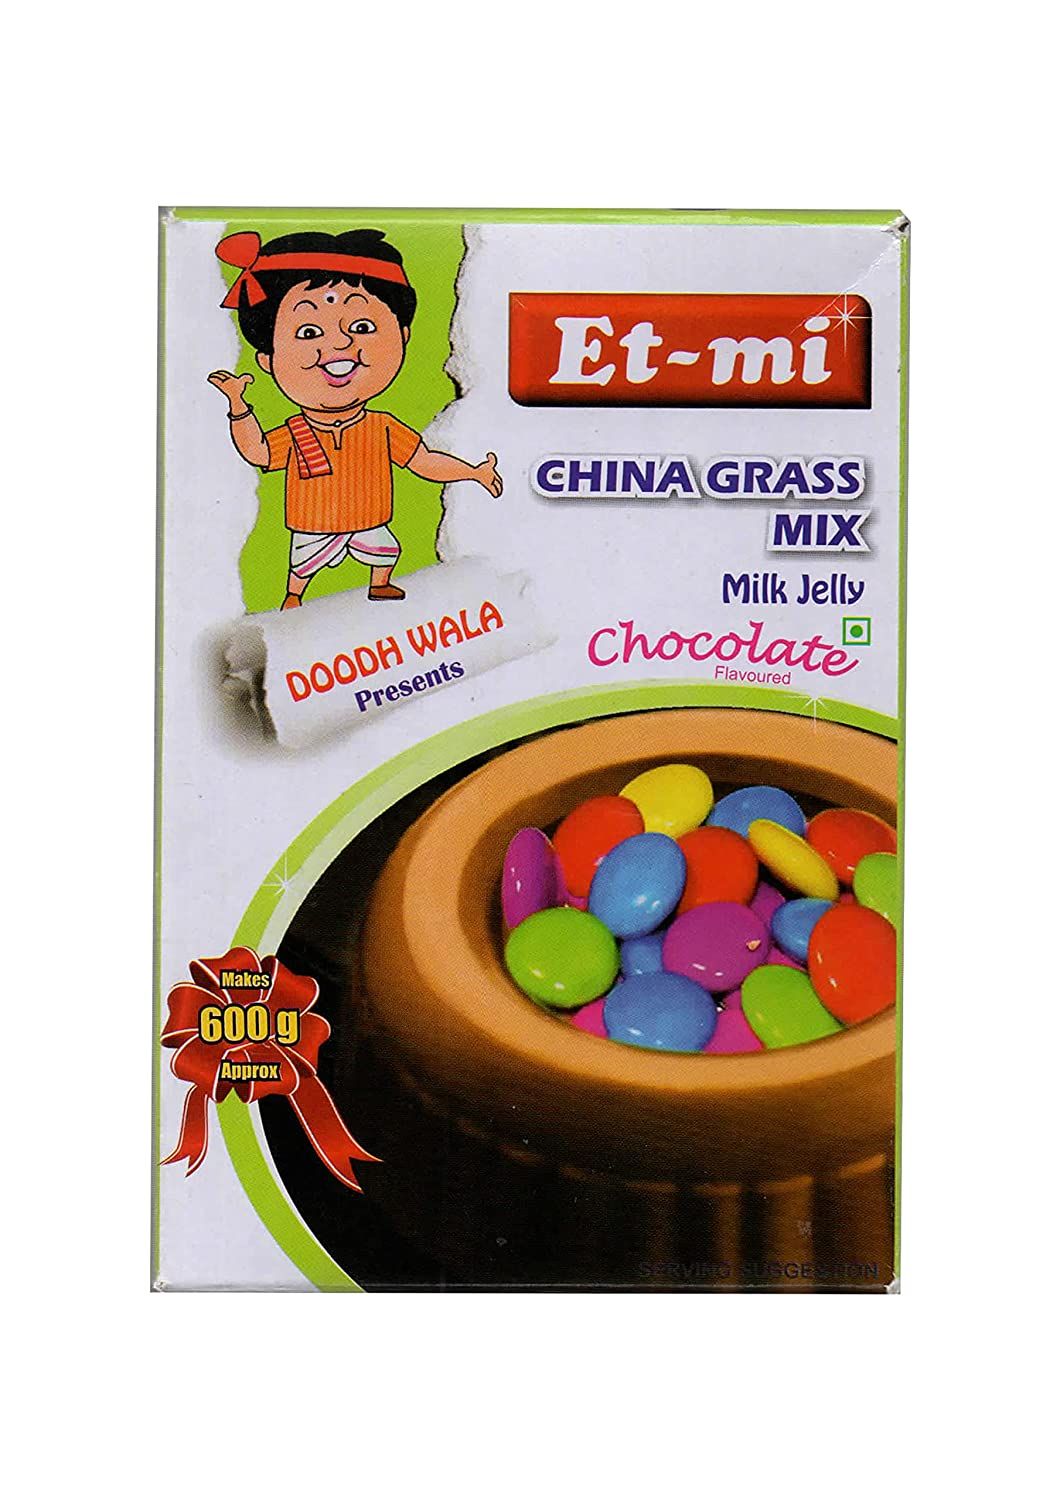 Et Mi China Grass Mix Chocolate Image